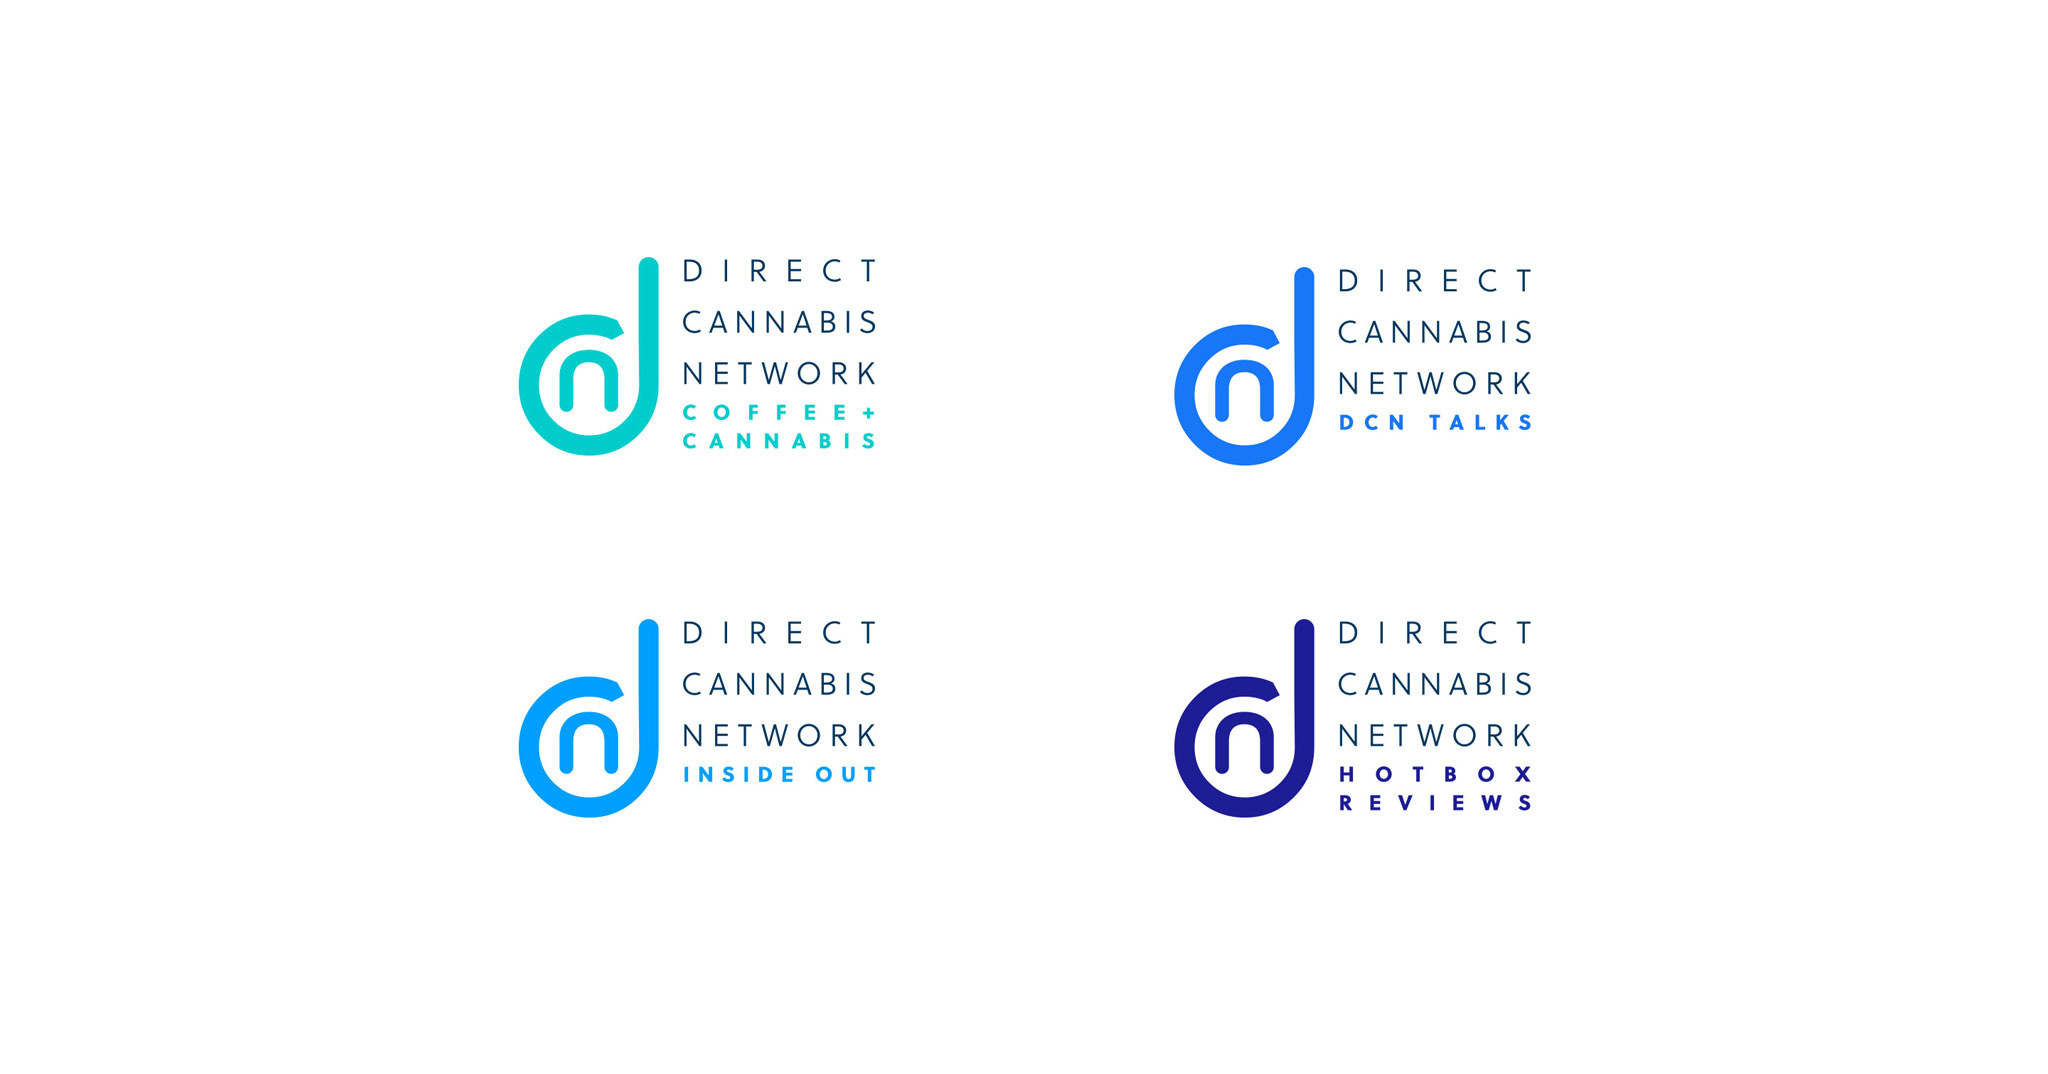 Direct Cannabis Network logo designs